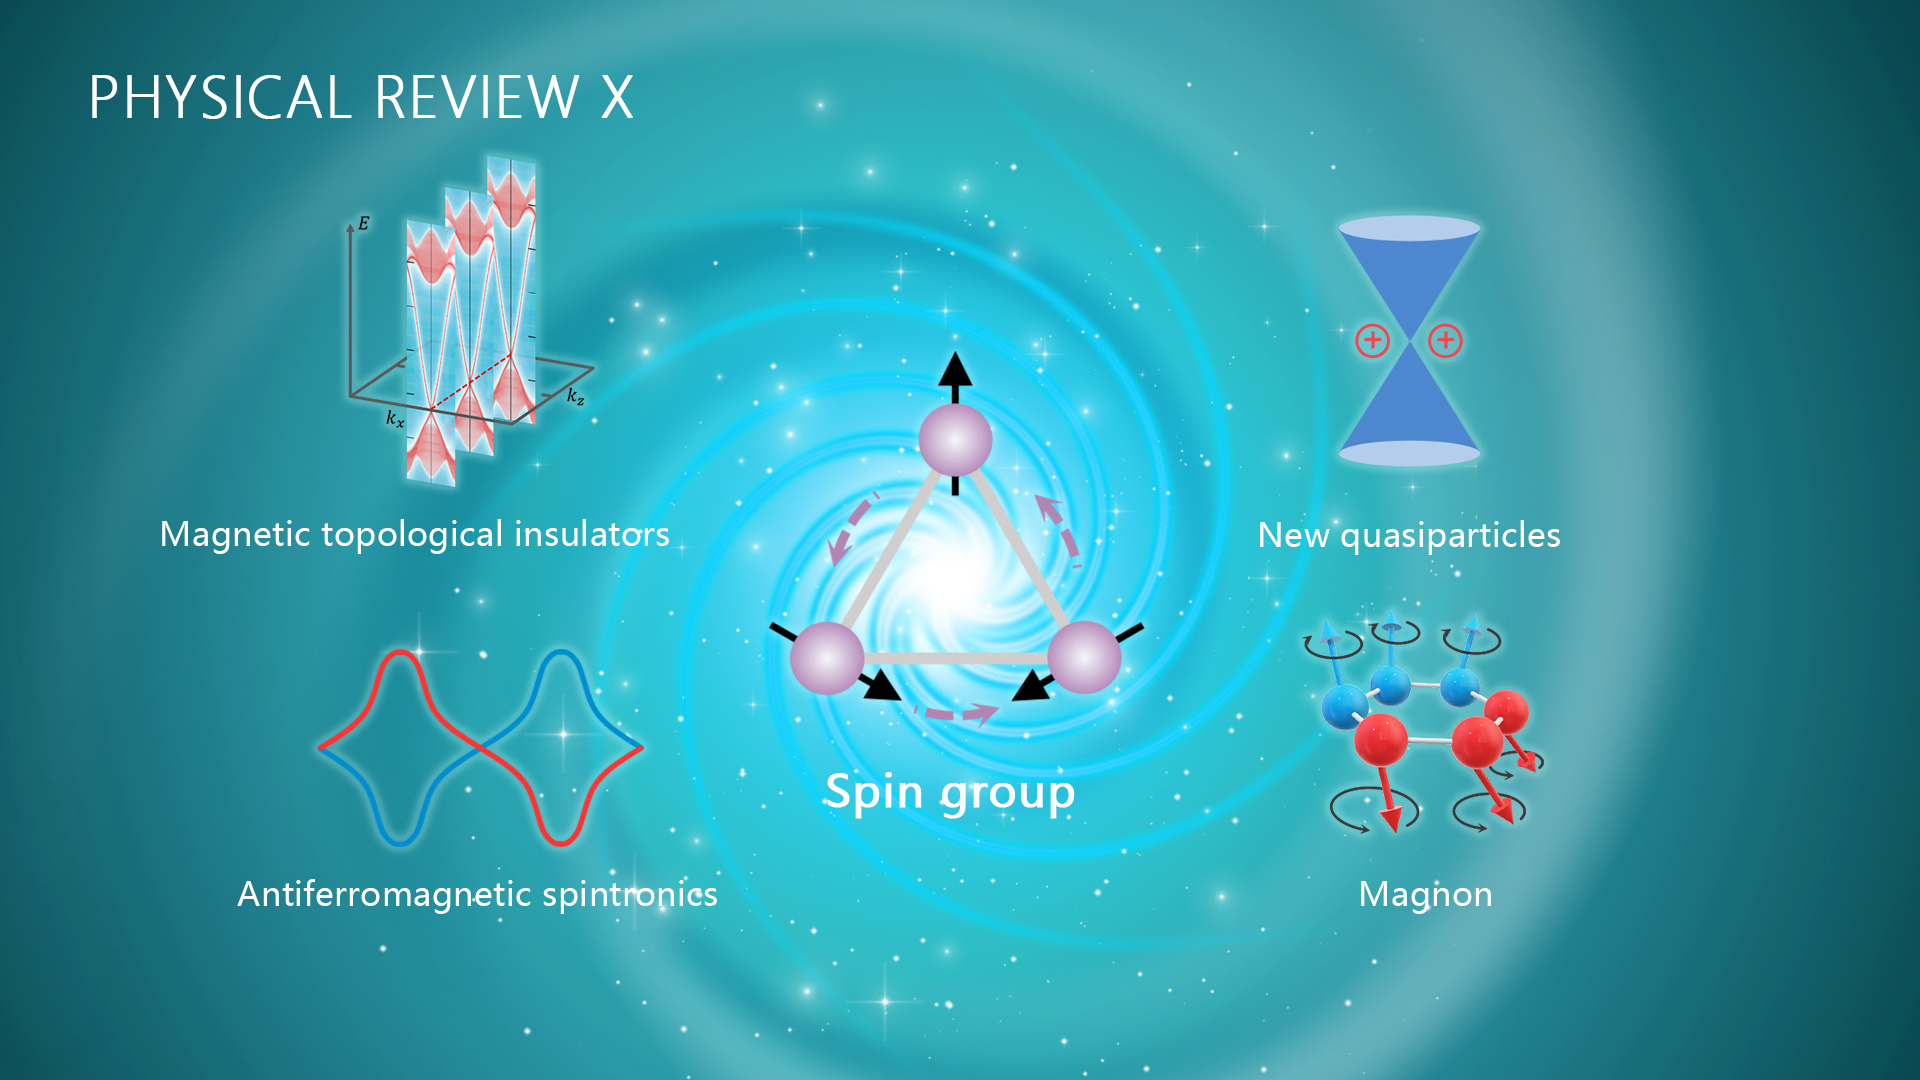 Researchers make progress on symmetry description in magnetic materials